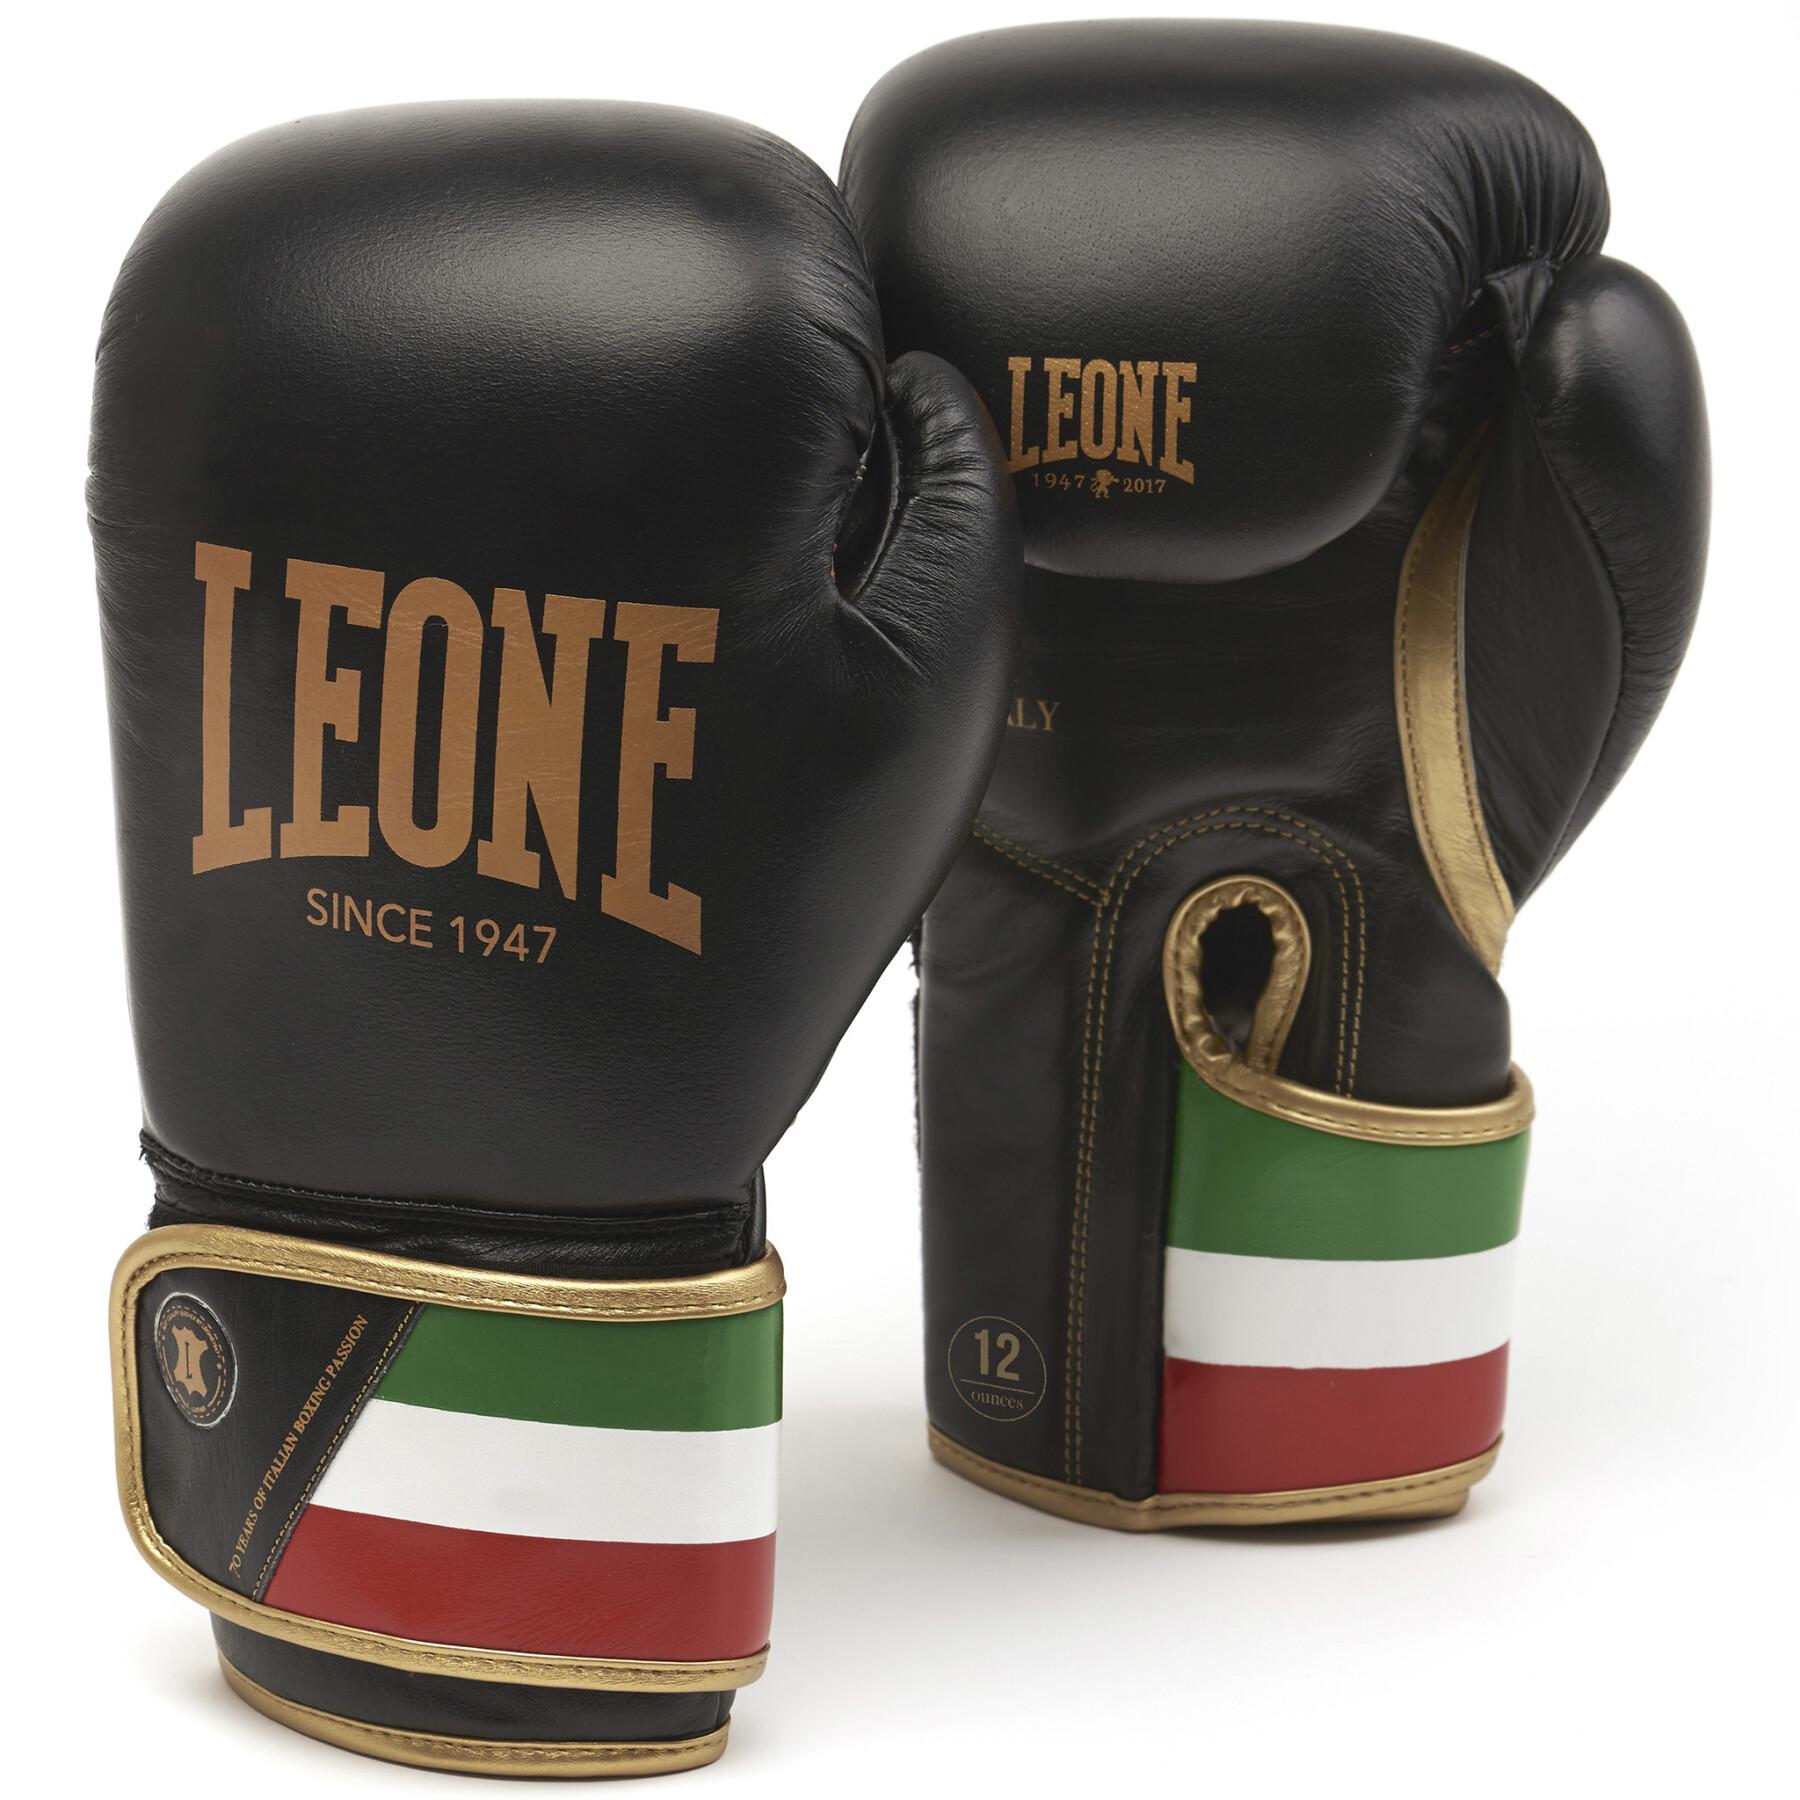 Luvas de boxe Leone Italy 10 oz